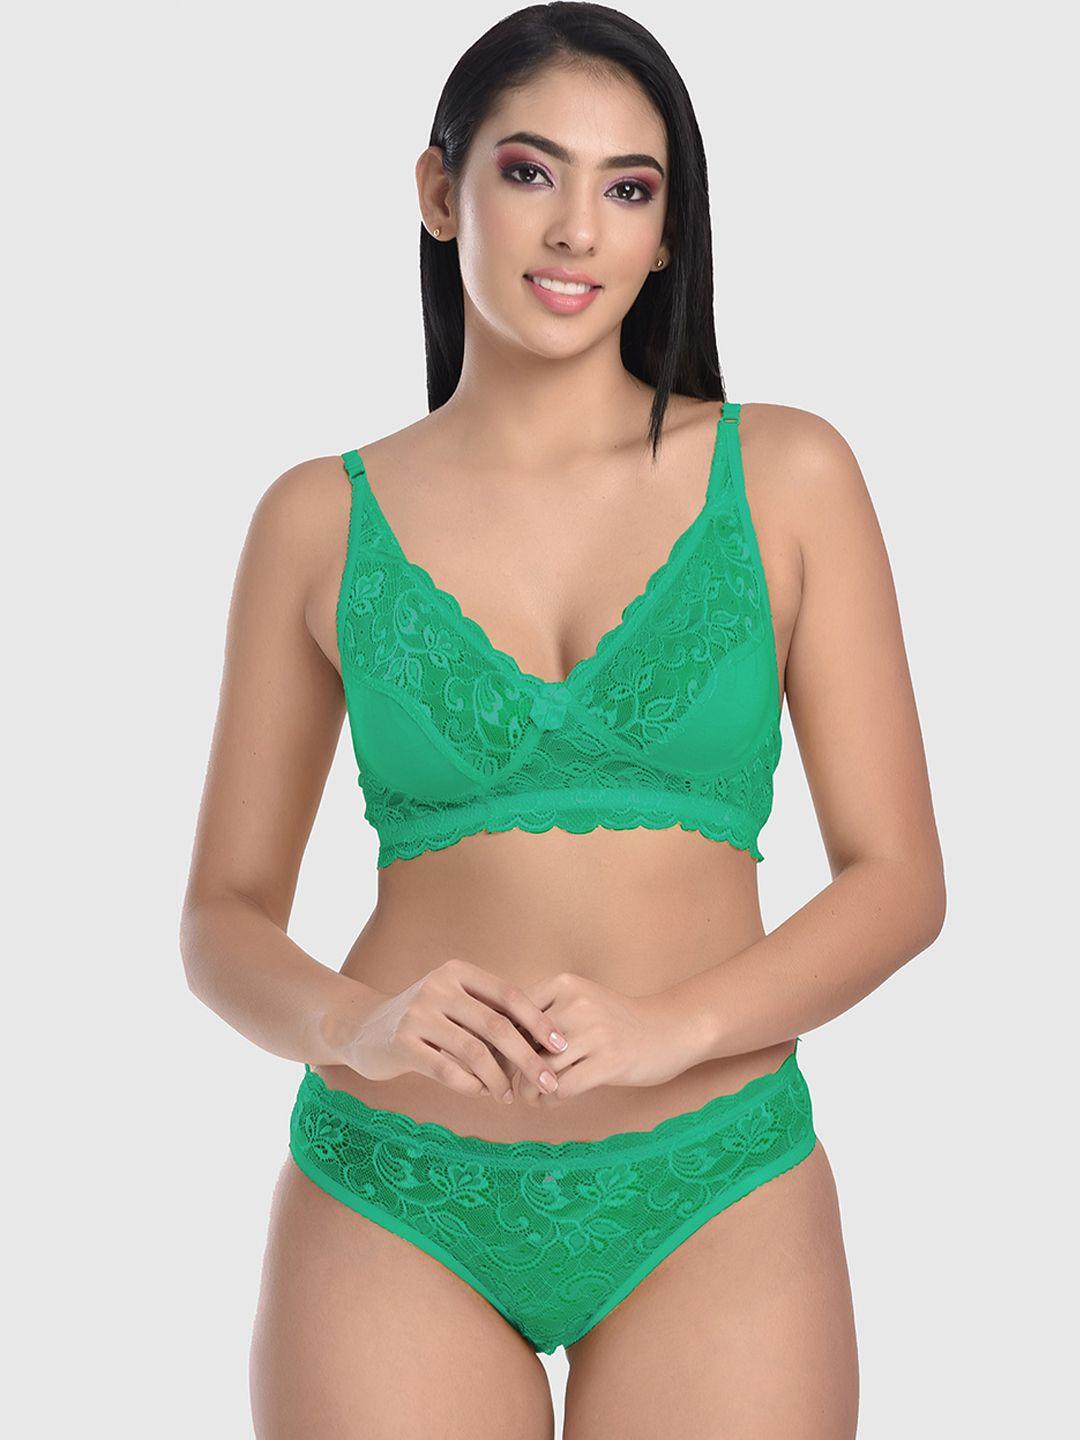 fims women green printed hipster lingerie set
vendorarticlenumber
i-ten_set_packof1_green